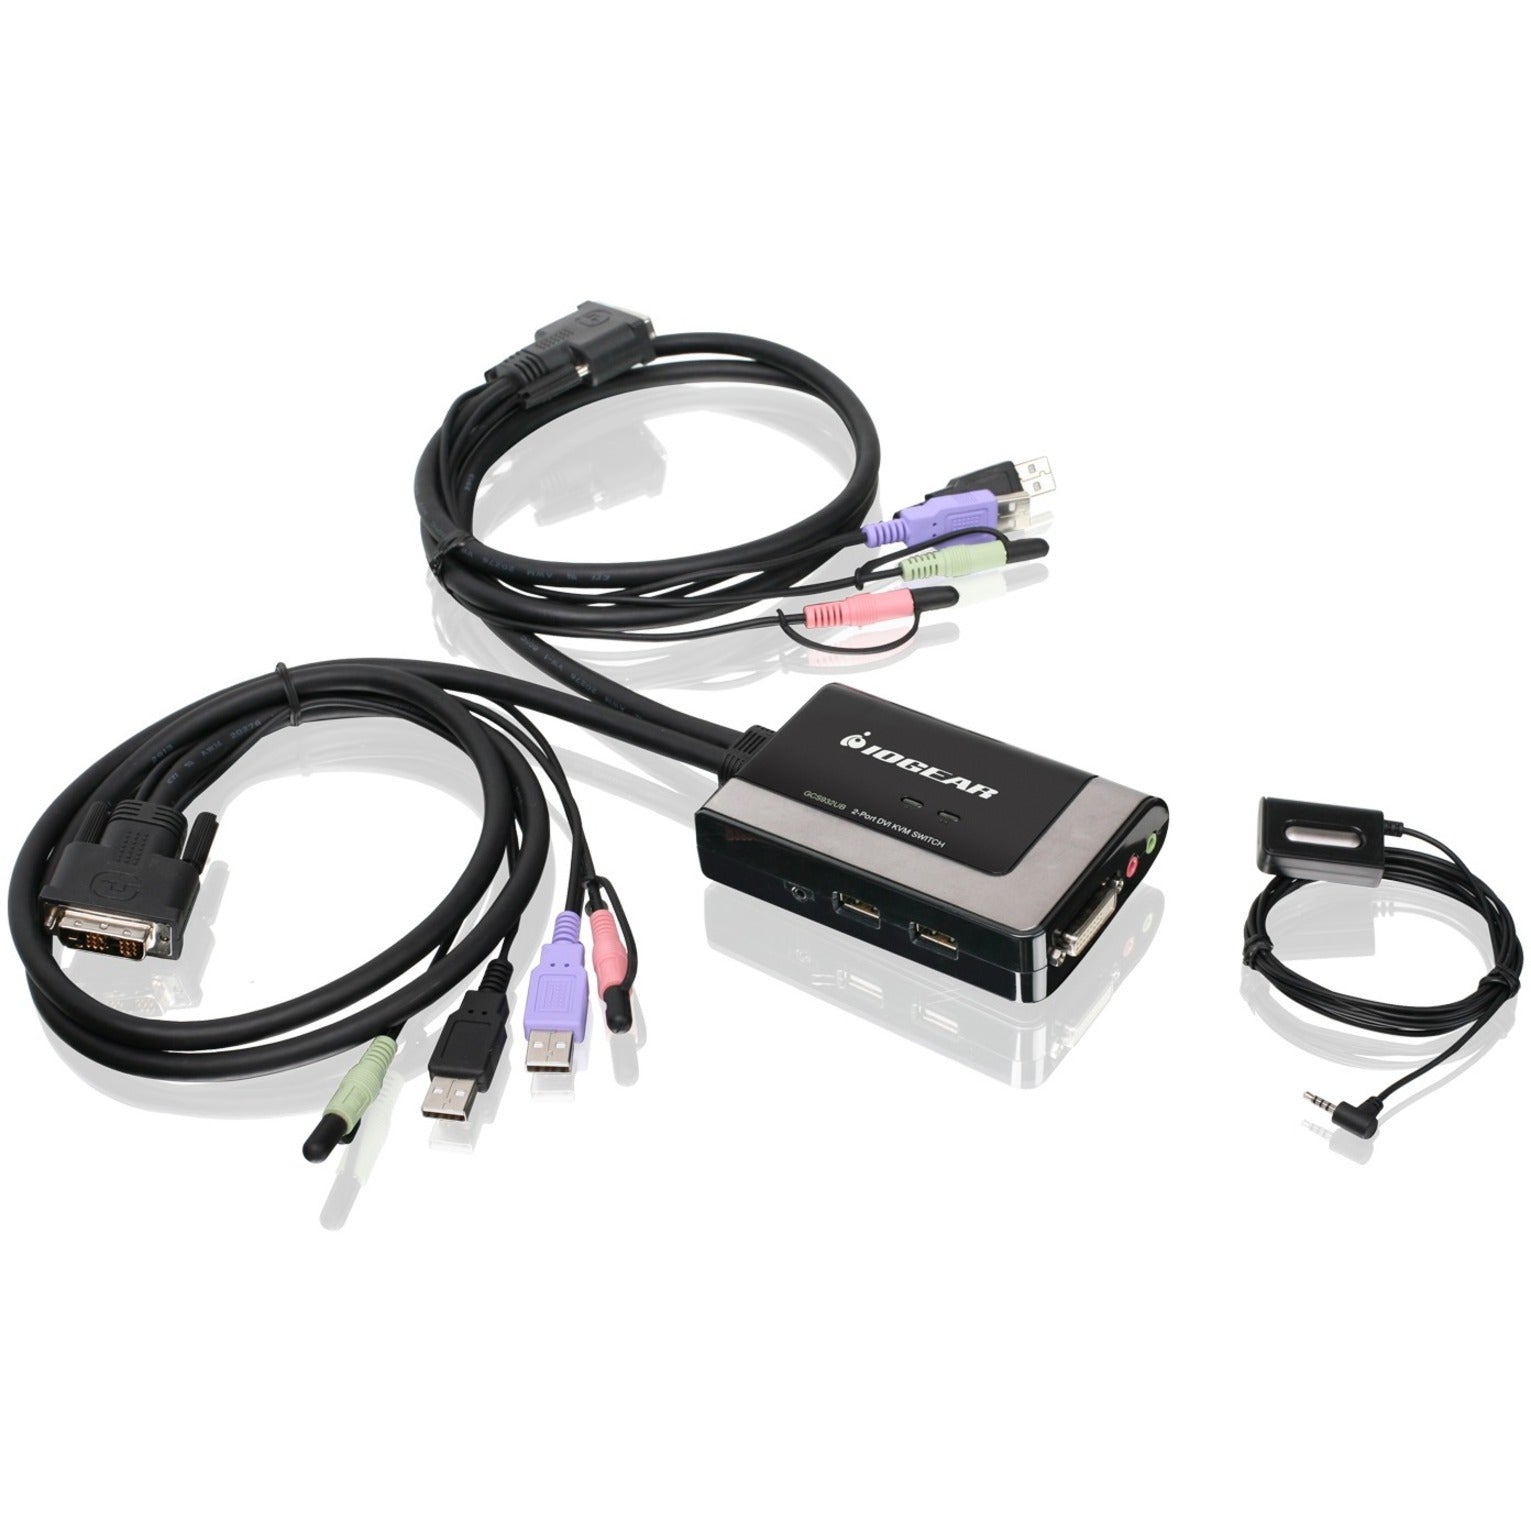 IOGEAR GCS932UB KVM Switch, 2-Port DVI USB KVM Switchbox, WUXGA 1920 x 1200 Resolution, 3 Year Warranty